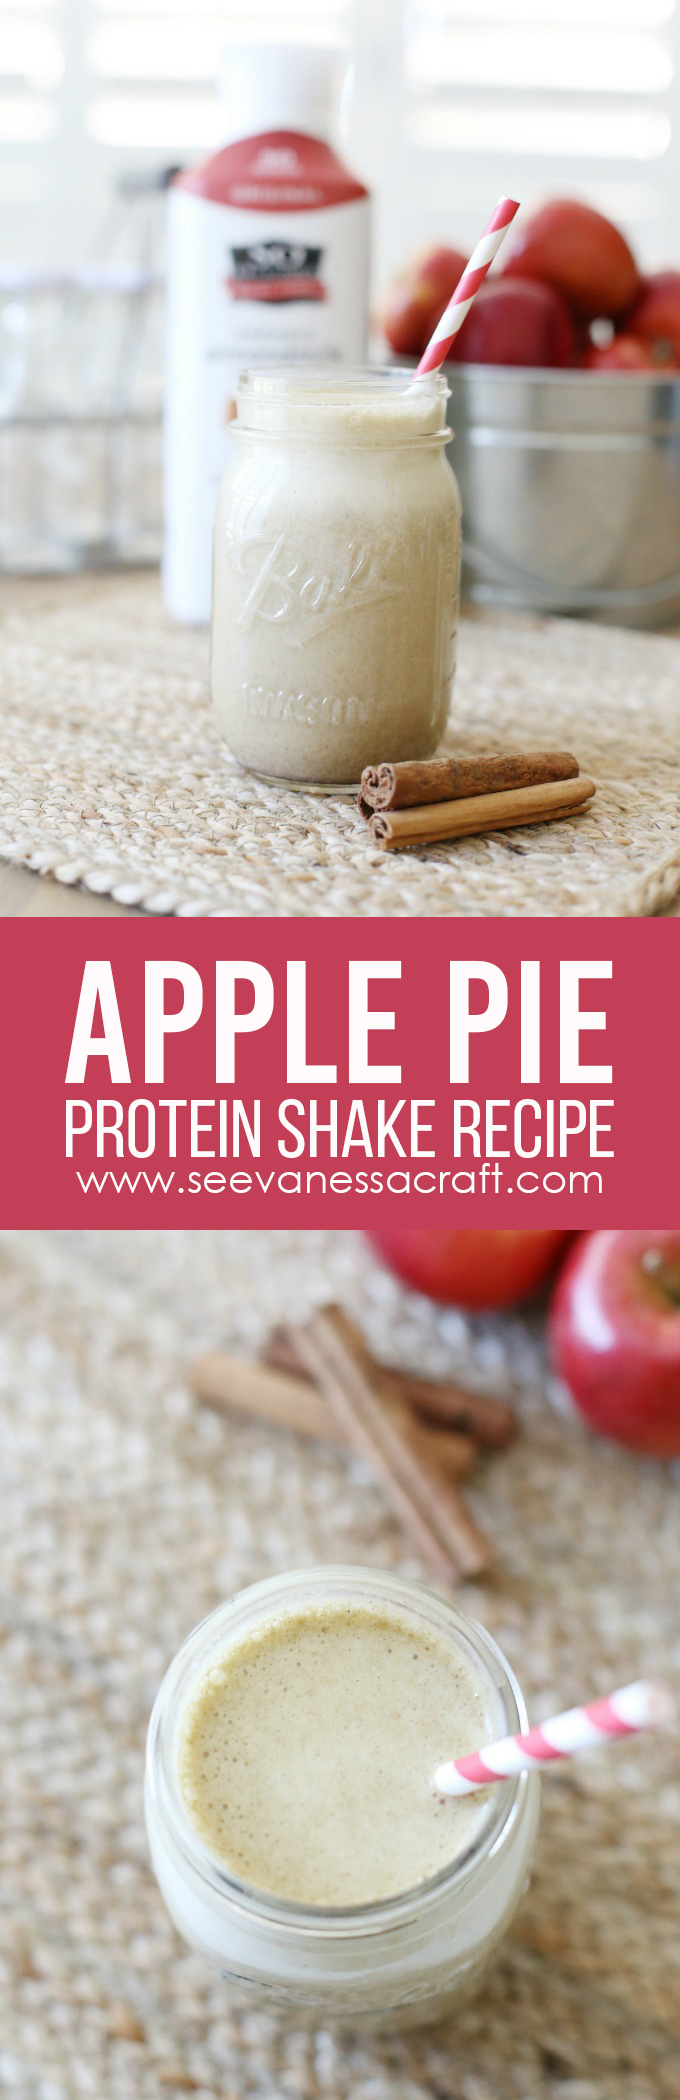 Apple Pie Protein Shake Recipe